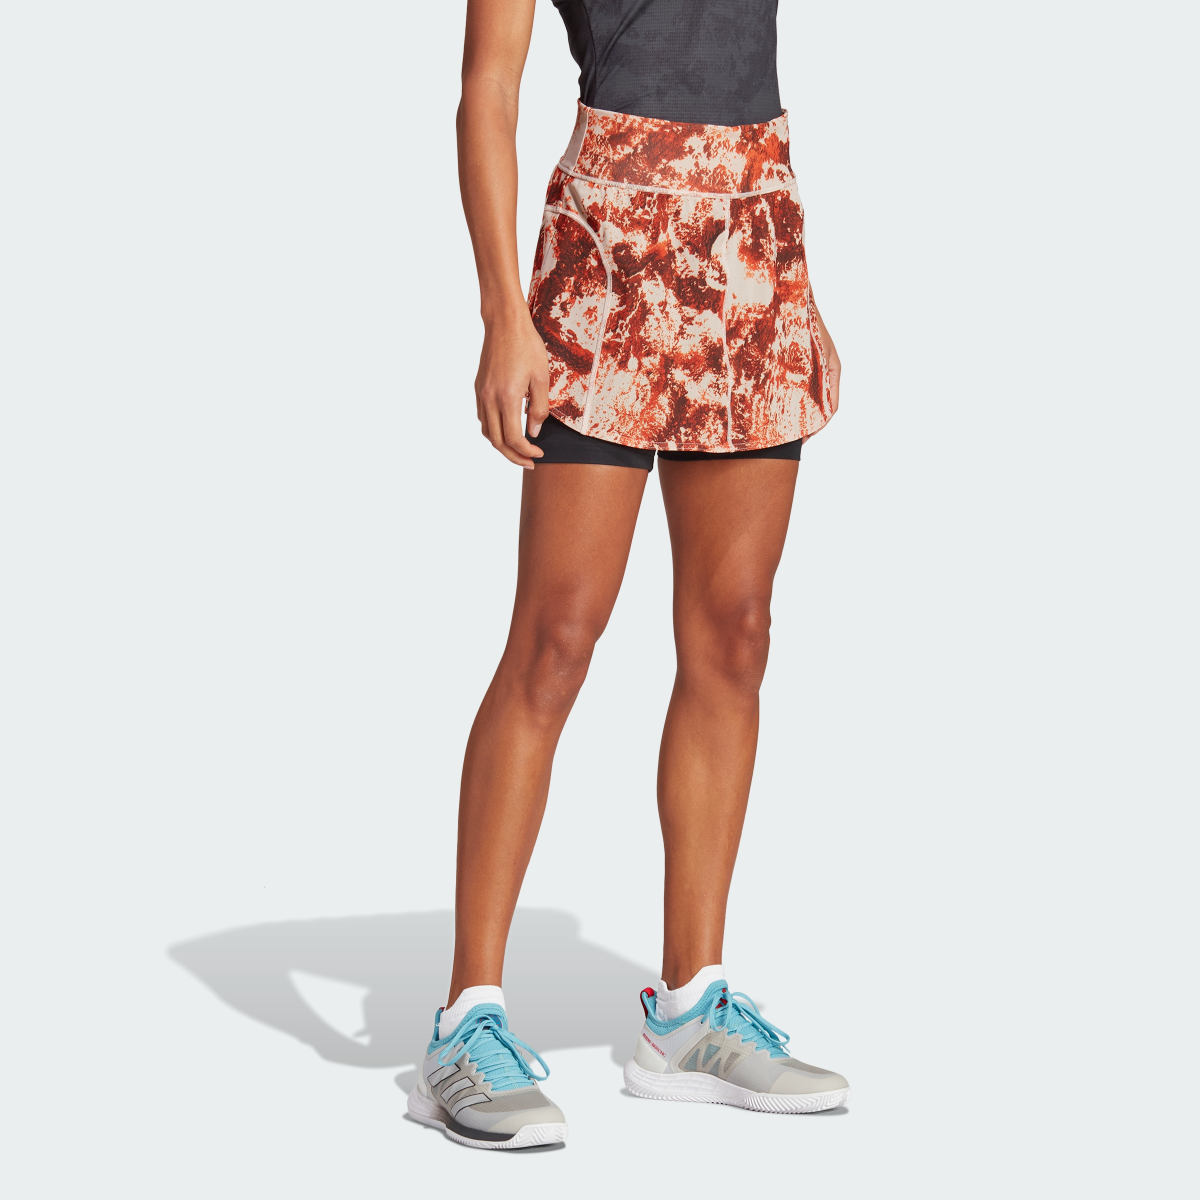 Adidas Tennis Paris Match Skirt. 4